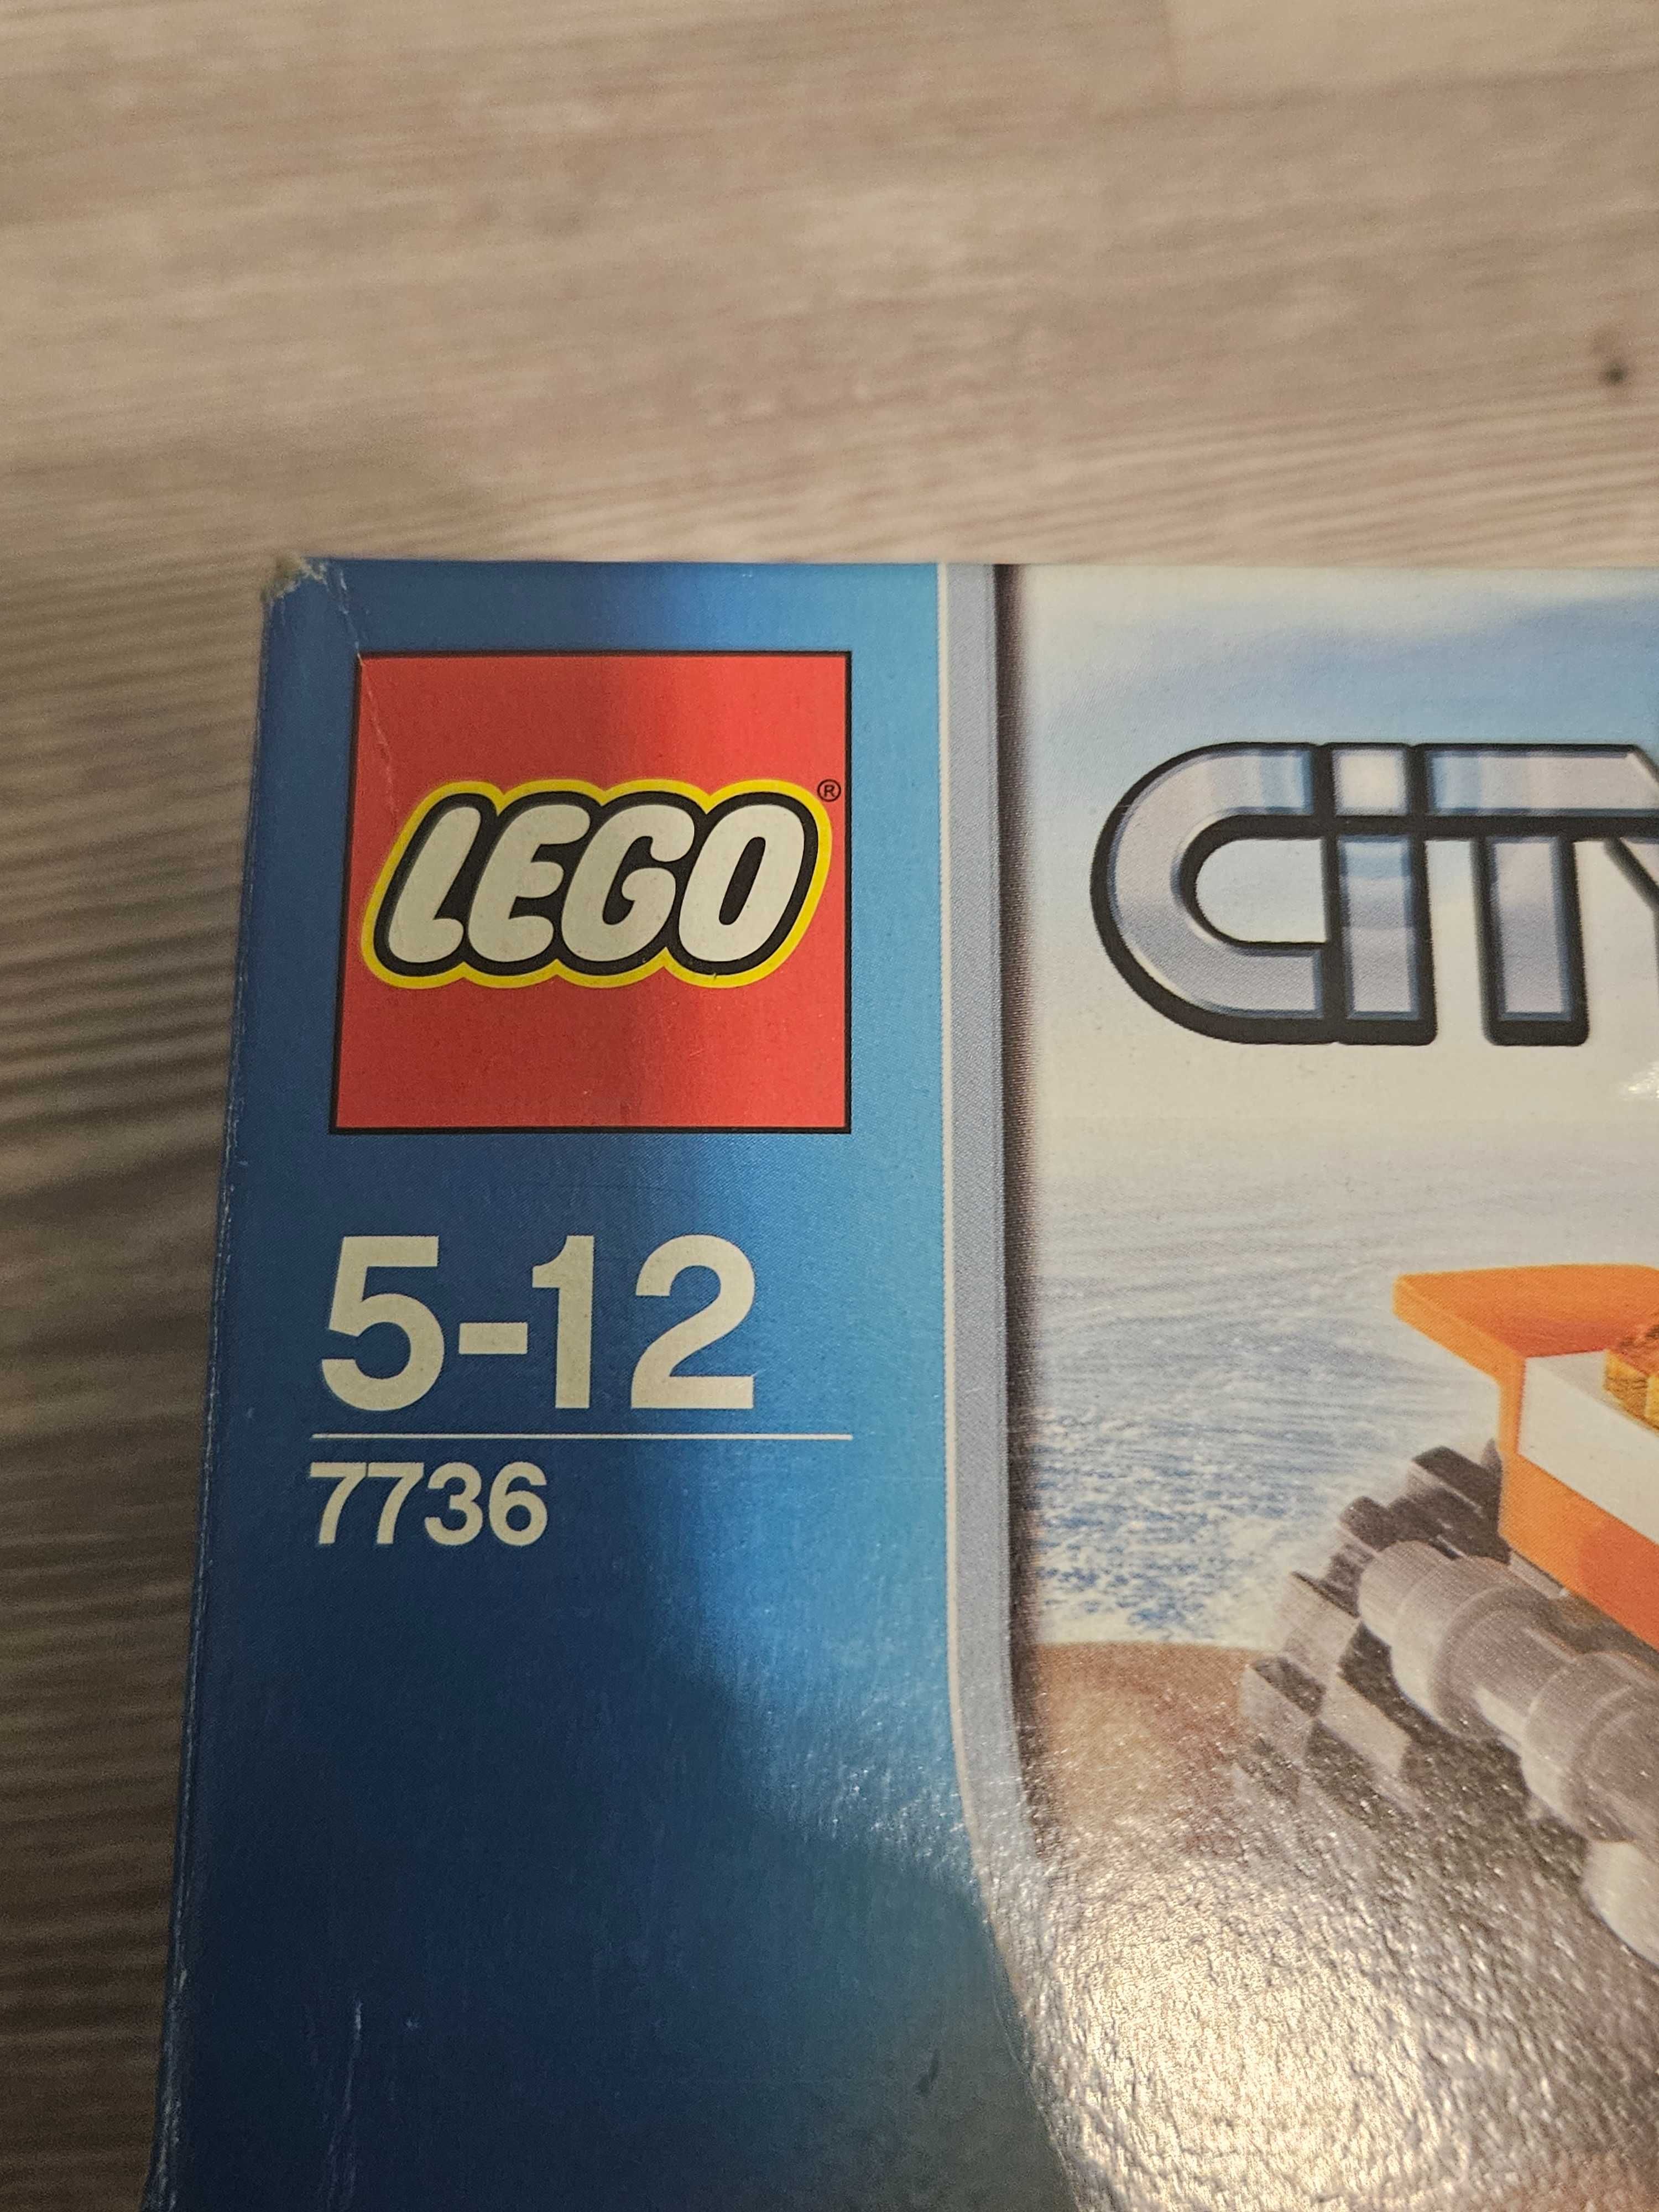 LEGO City 7736 Quad